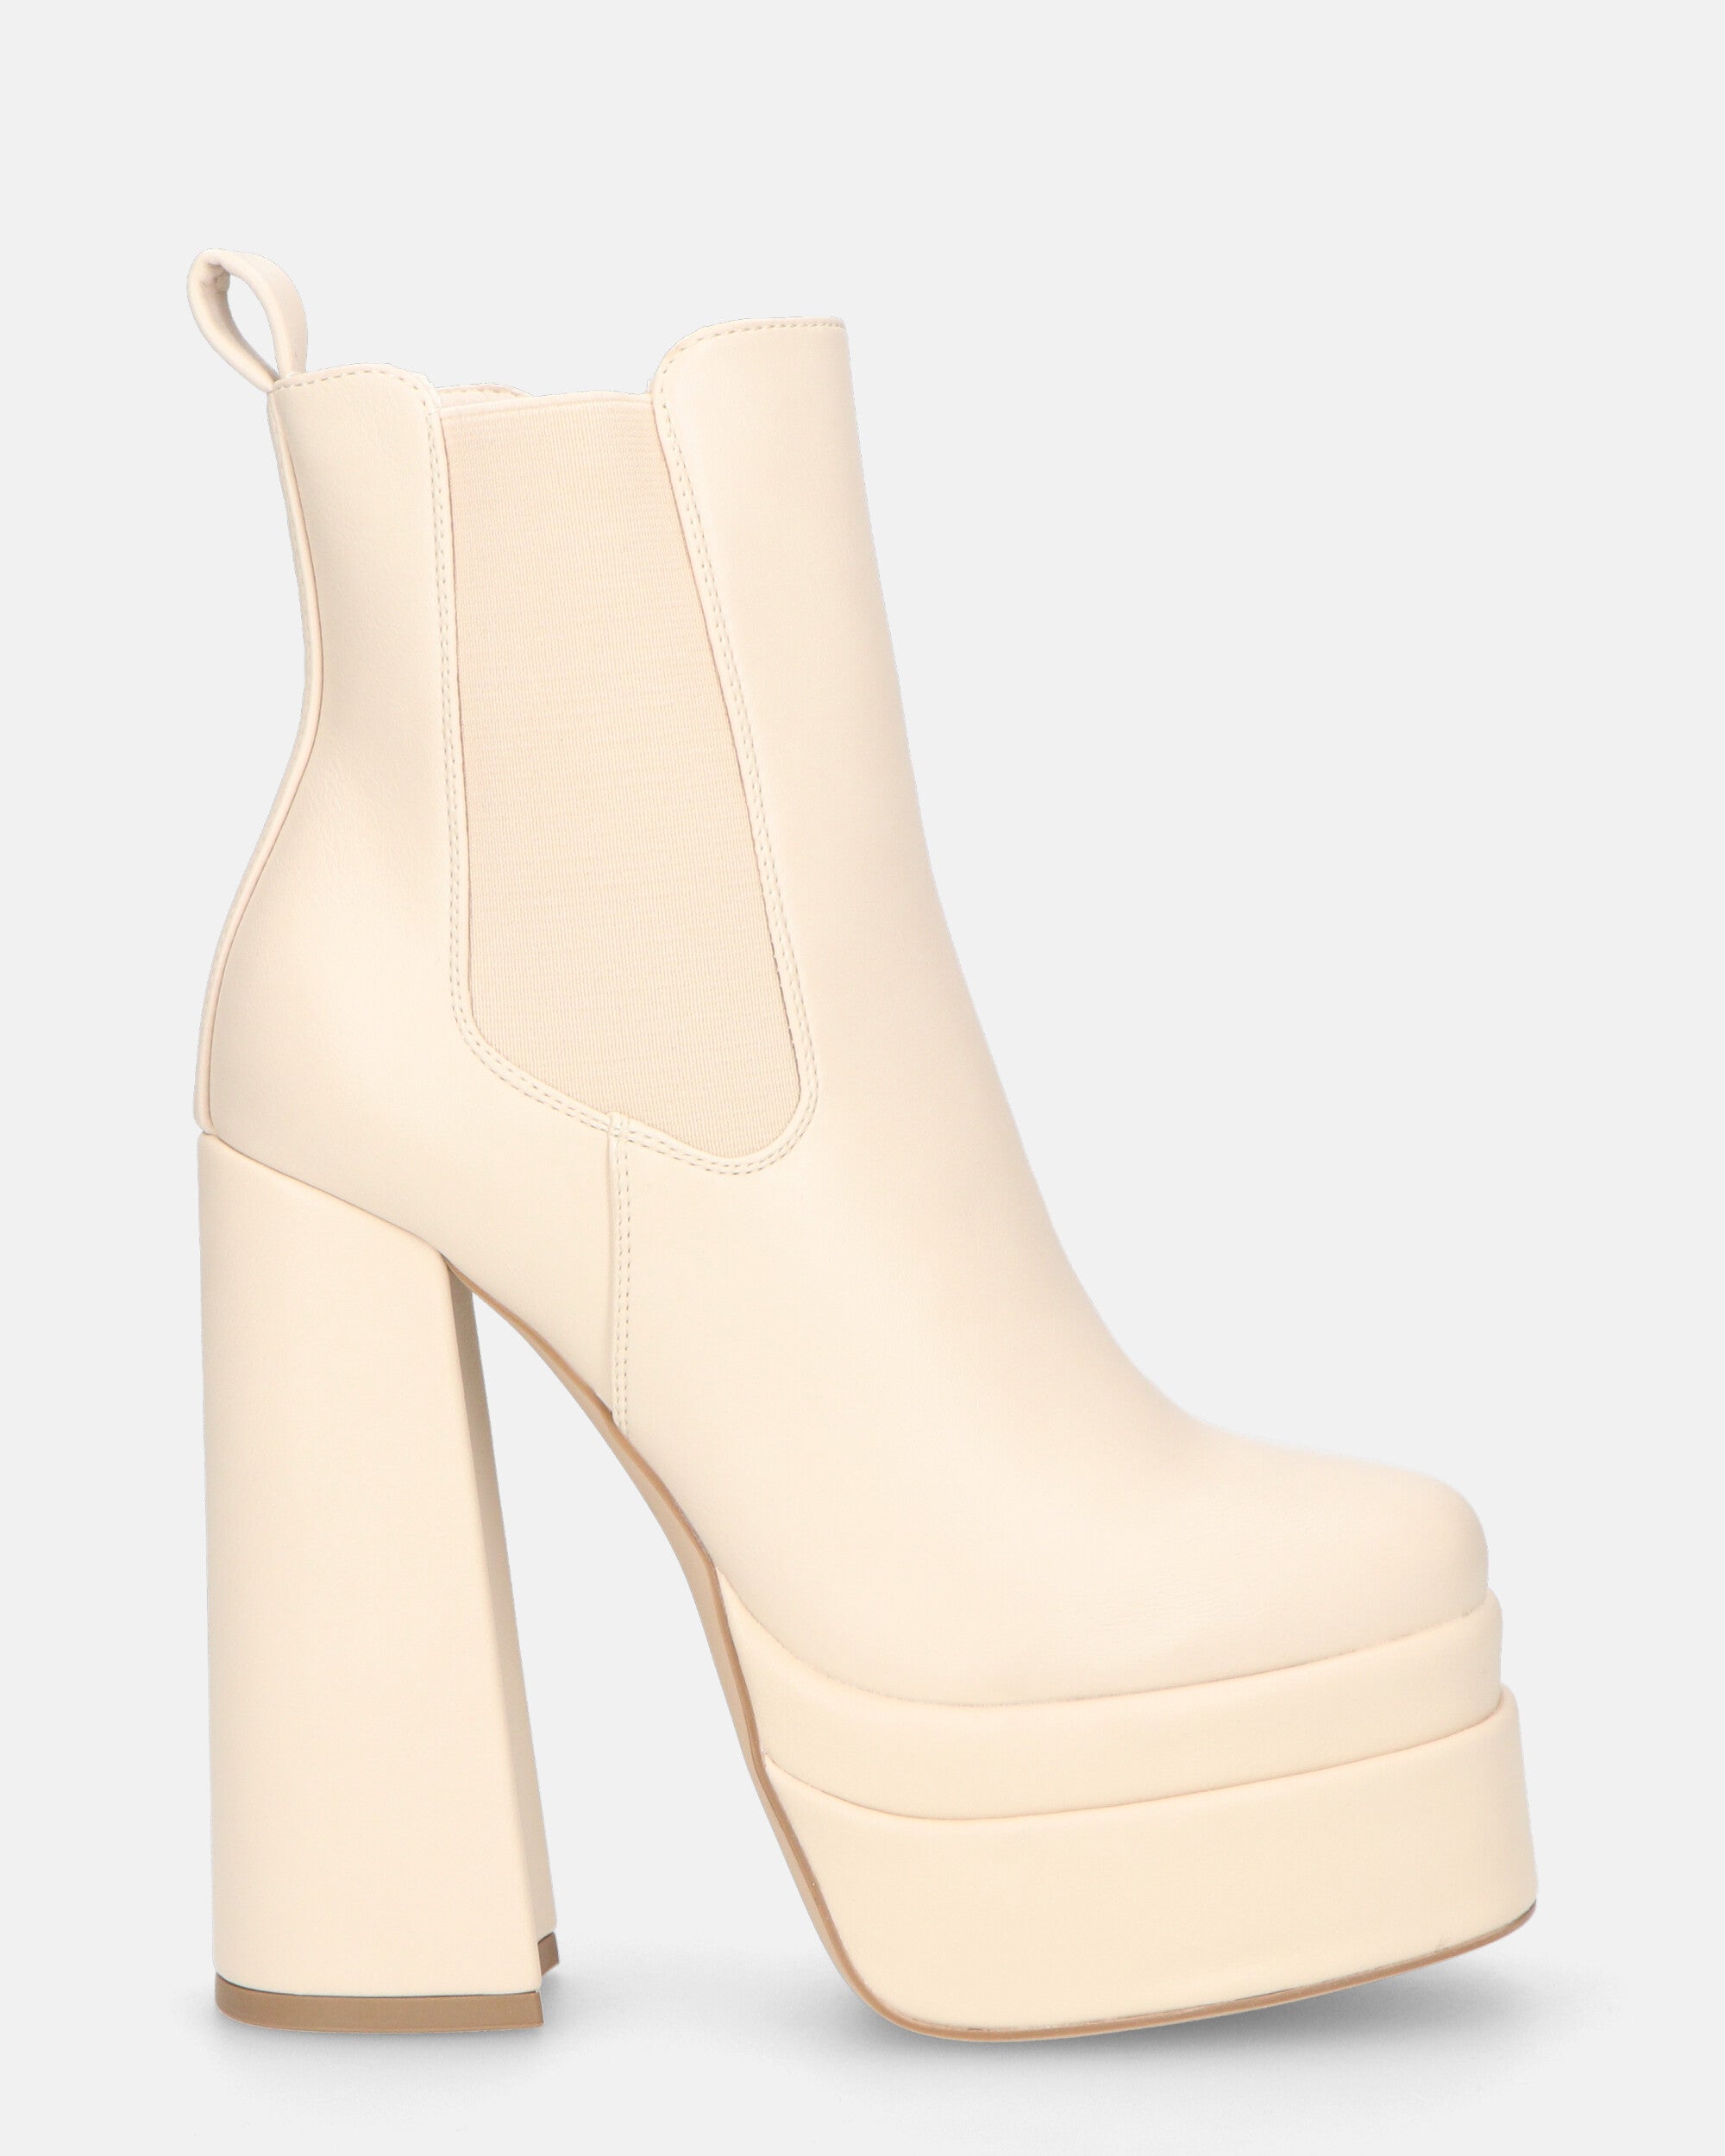 SOLEDAD - beige PU high heel ankle boots